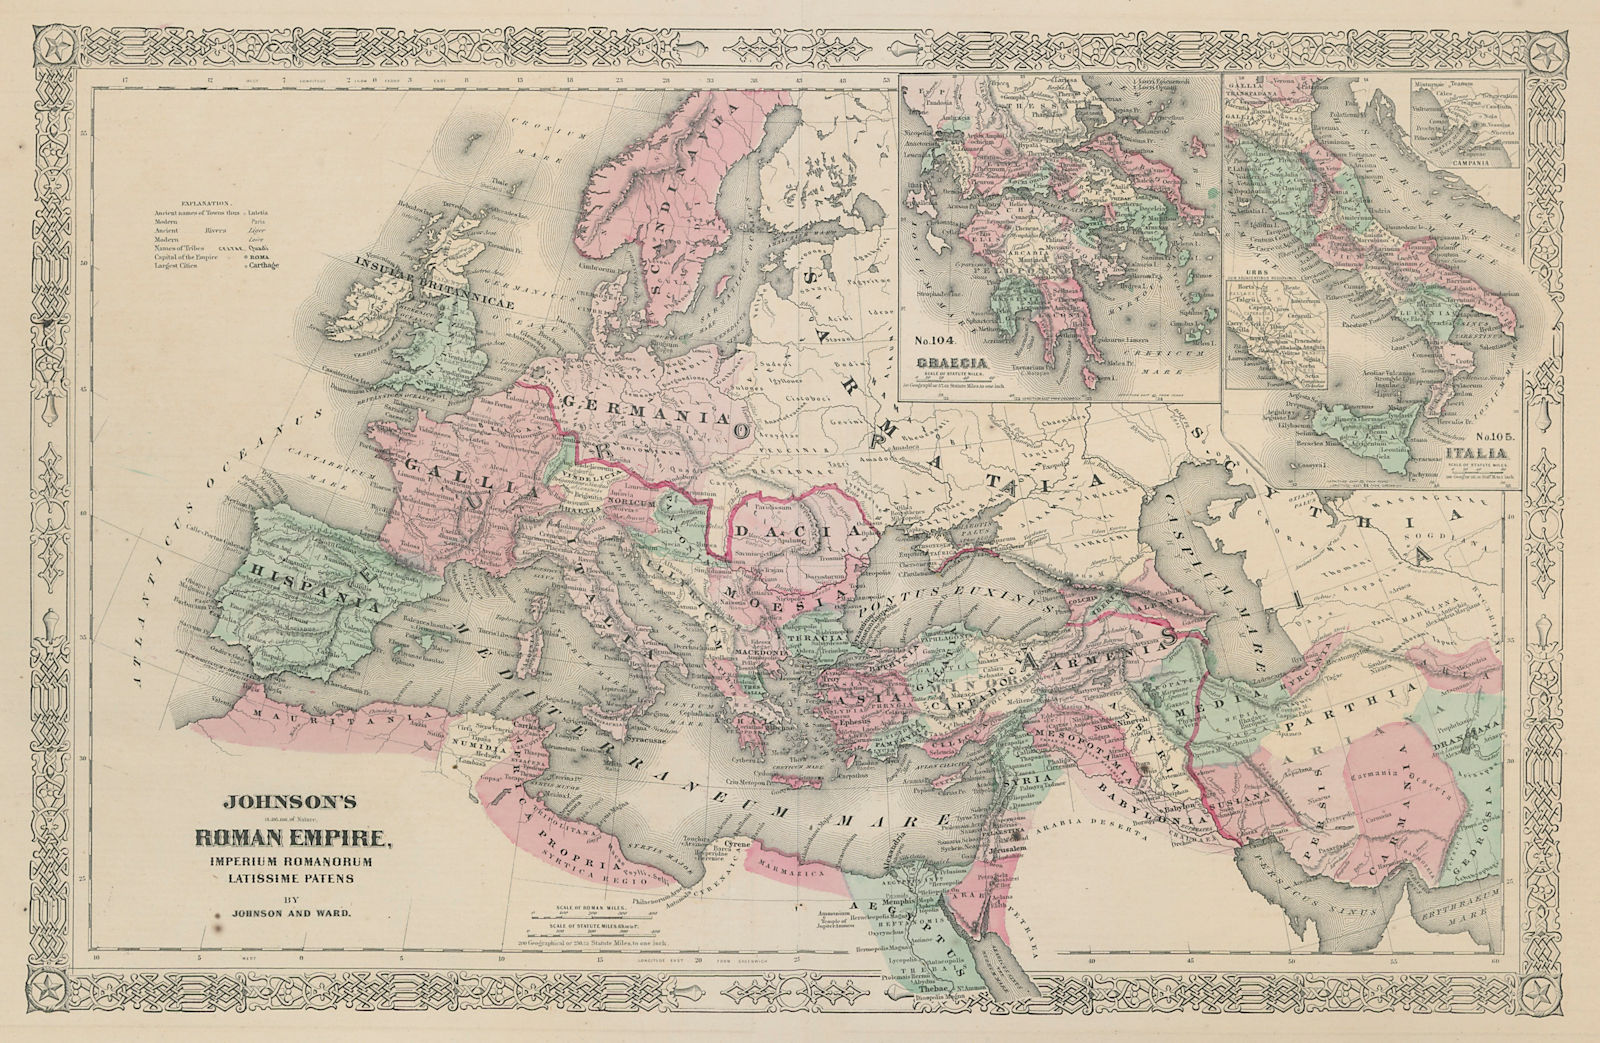 Johnson's Roman Empire. Imperium Romanorum. Graecia Italia Greece Italy 1865 map